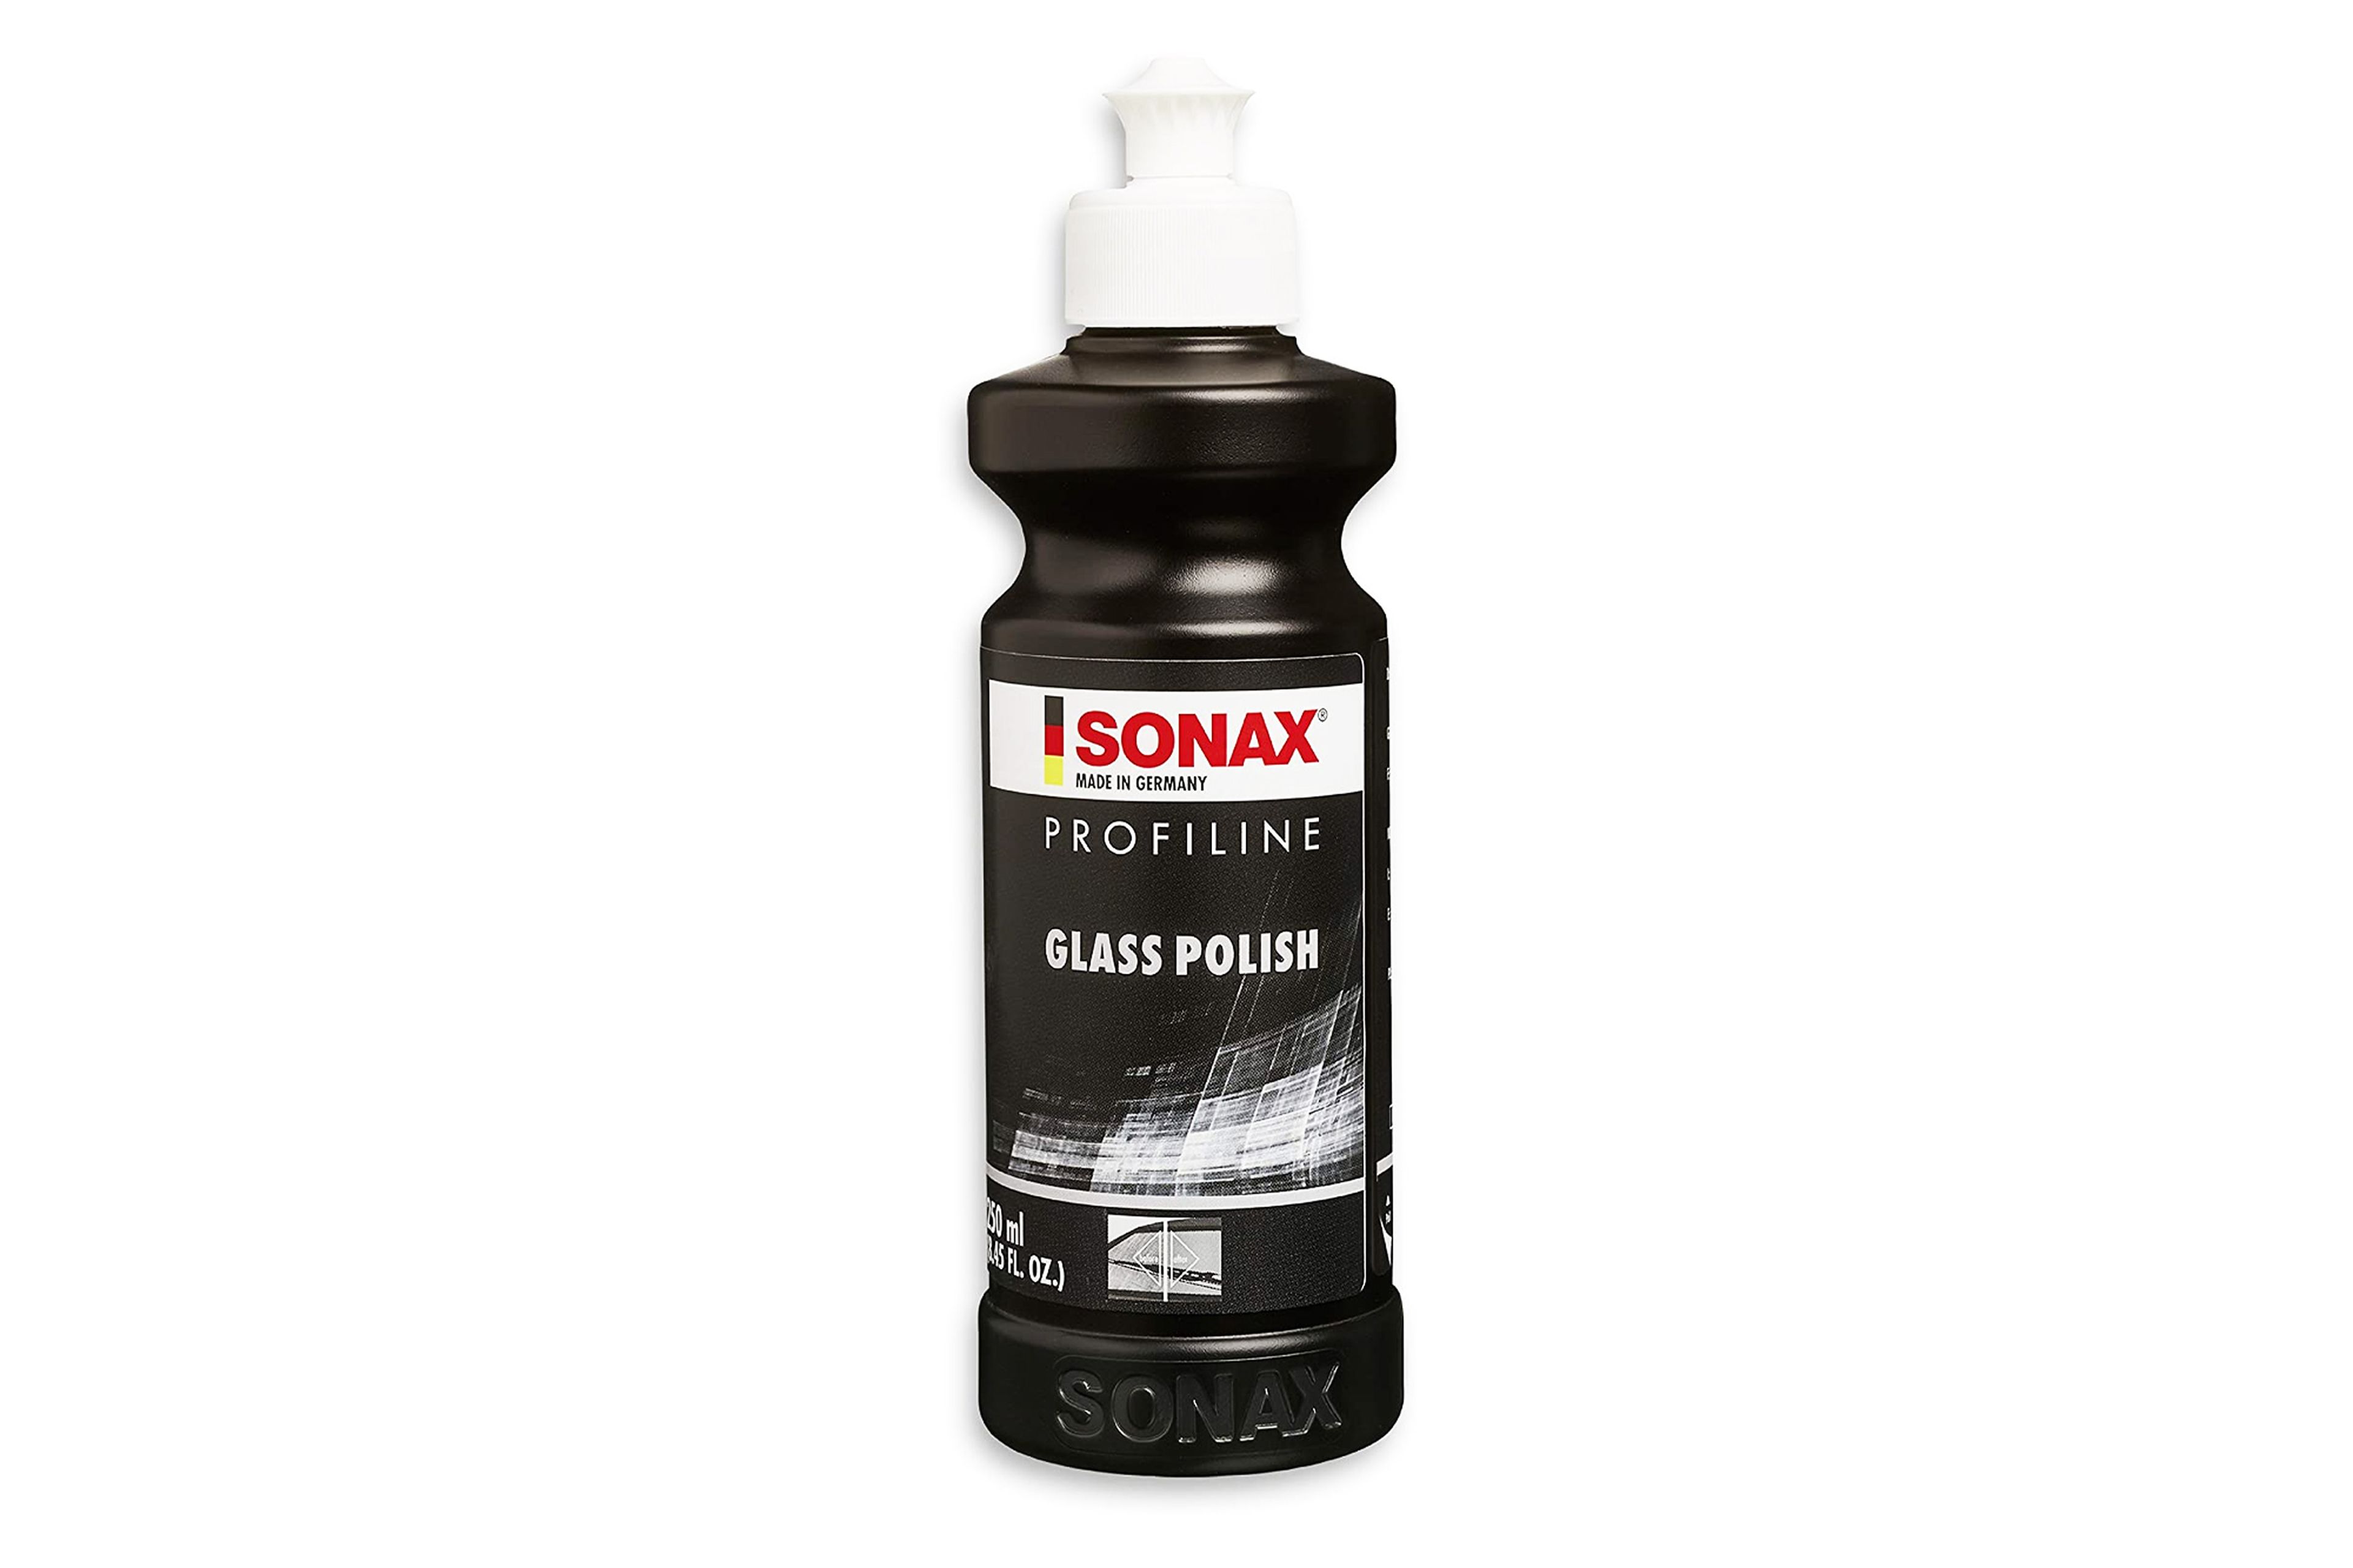 SONAX PROFILINE GlassPolish